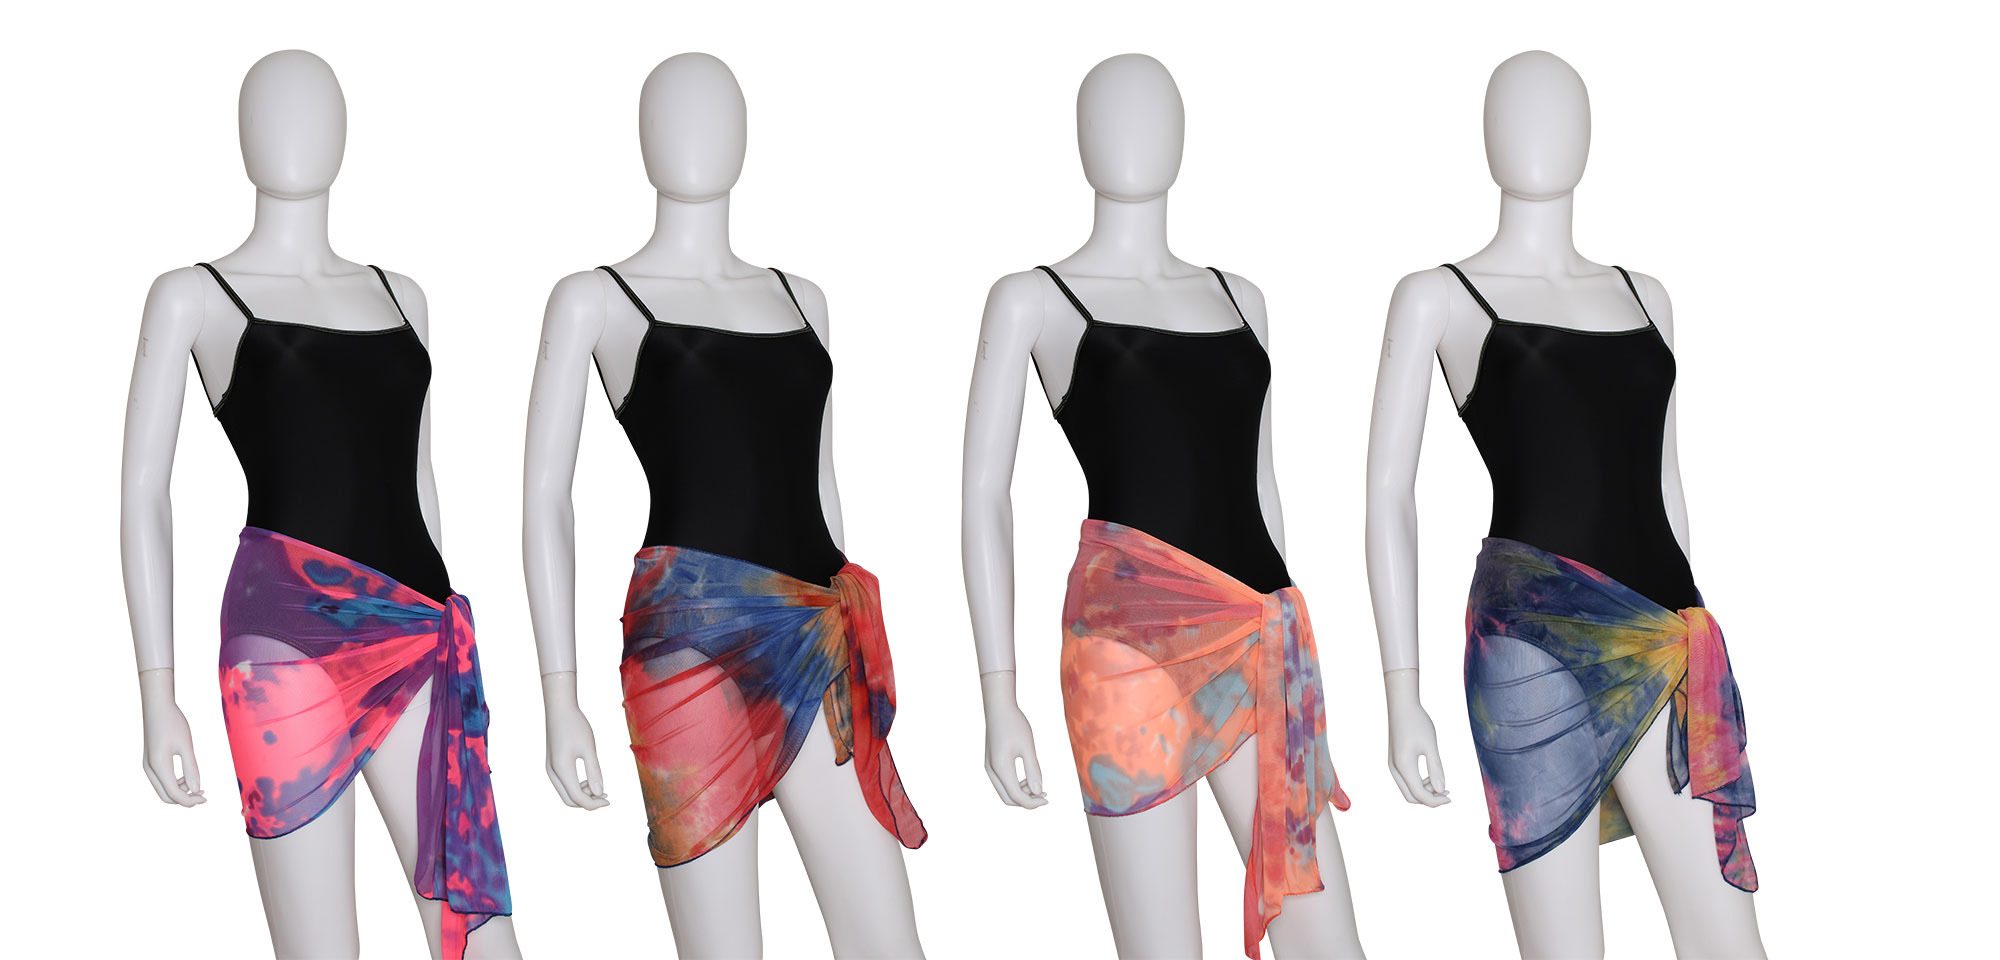 Women's Short-Length Mesh SARONG Wraps w/ Tie-Dye Print - One Size Fits Most